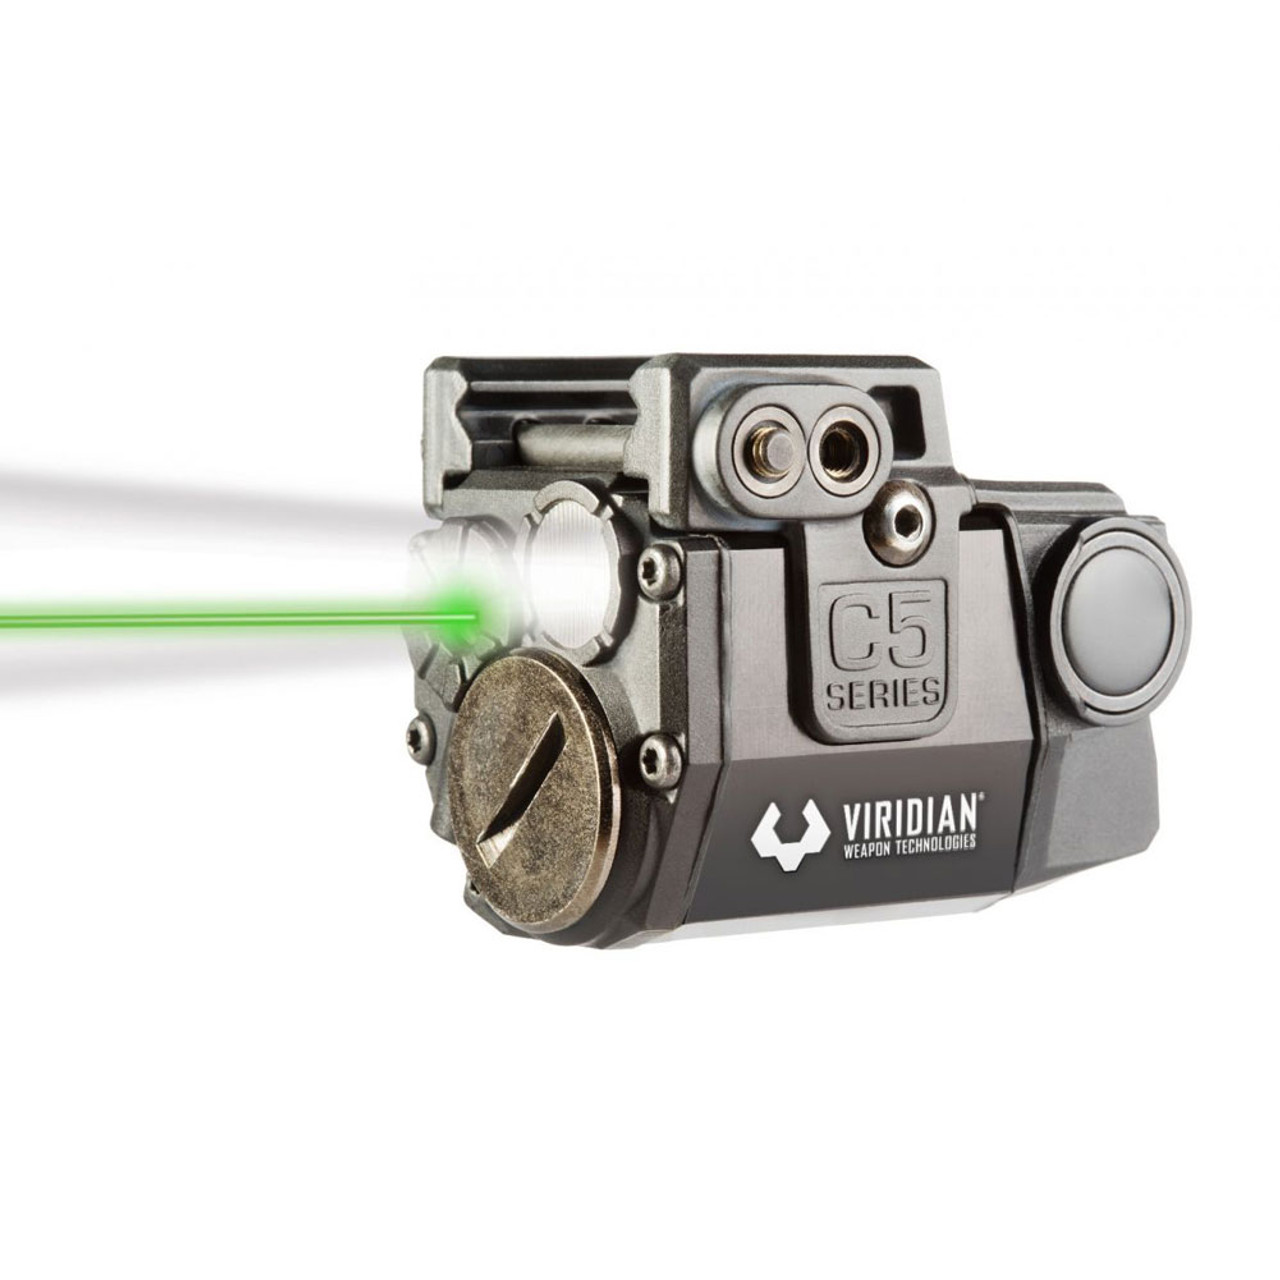 VIRIDIAN Universal Sub-Comp Grn Laser-ECR Tac Light C5L